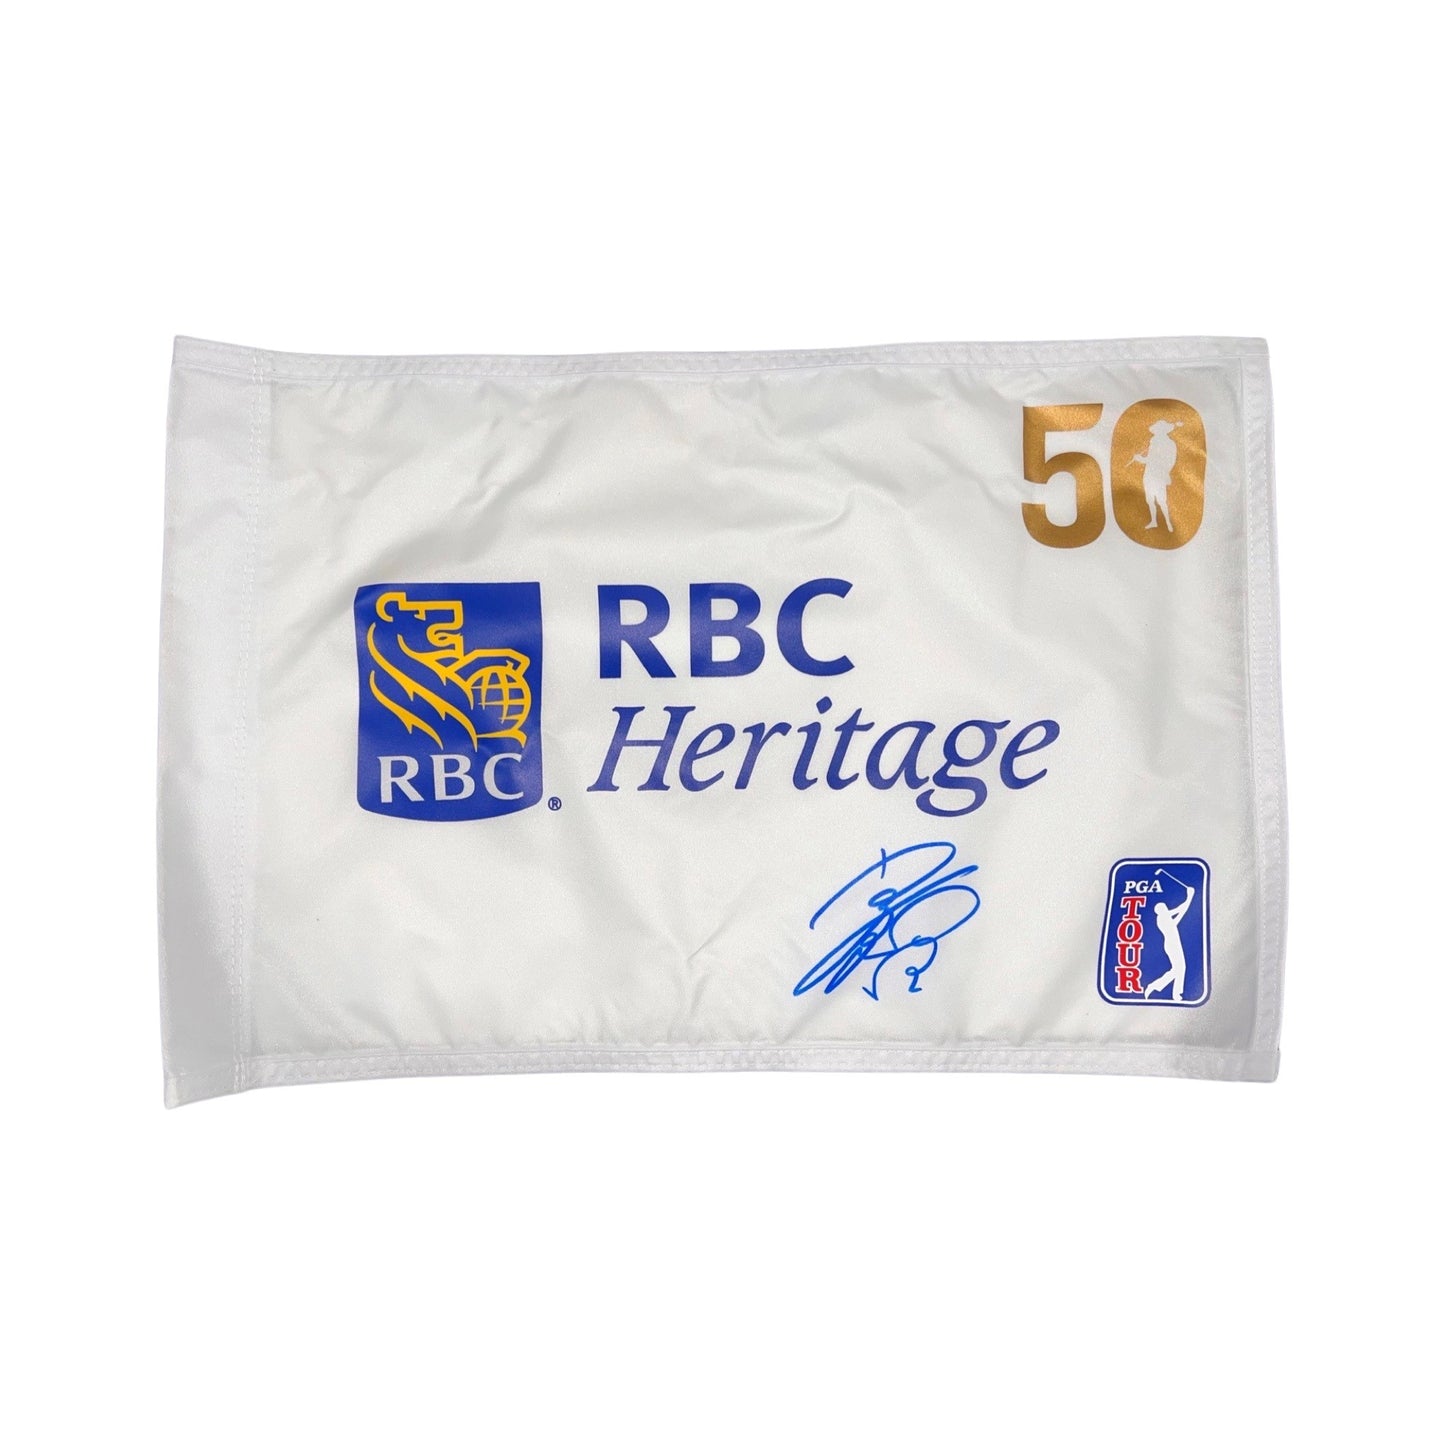 RBC Heritage 50th Anniversary Game Used Flag - Signed by Satoshi Kodaira 2018